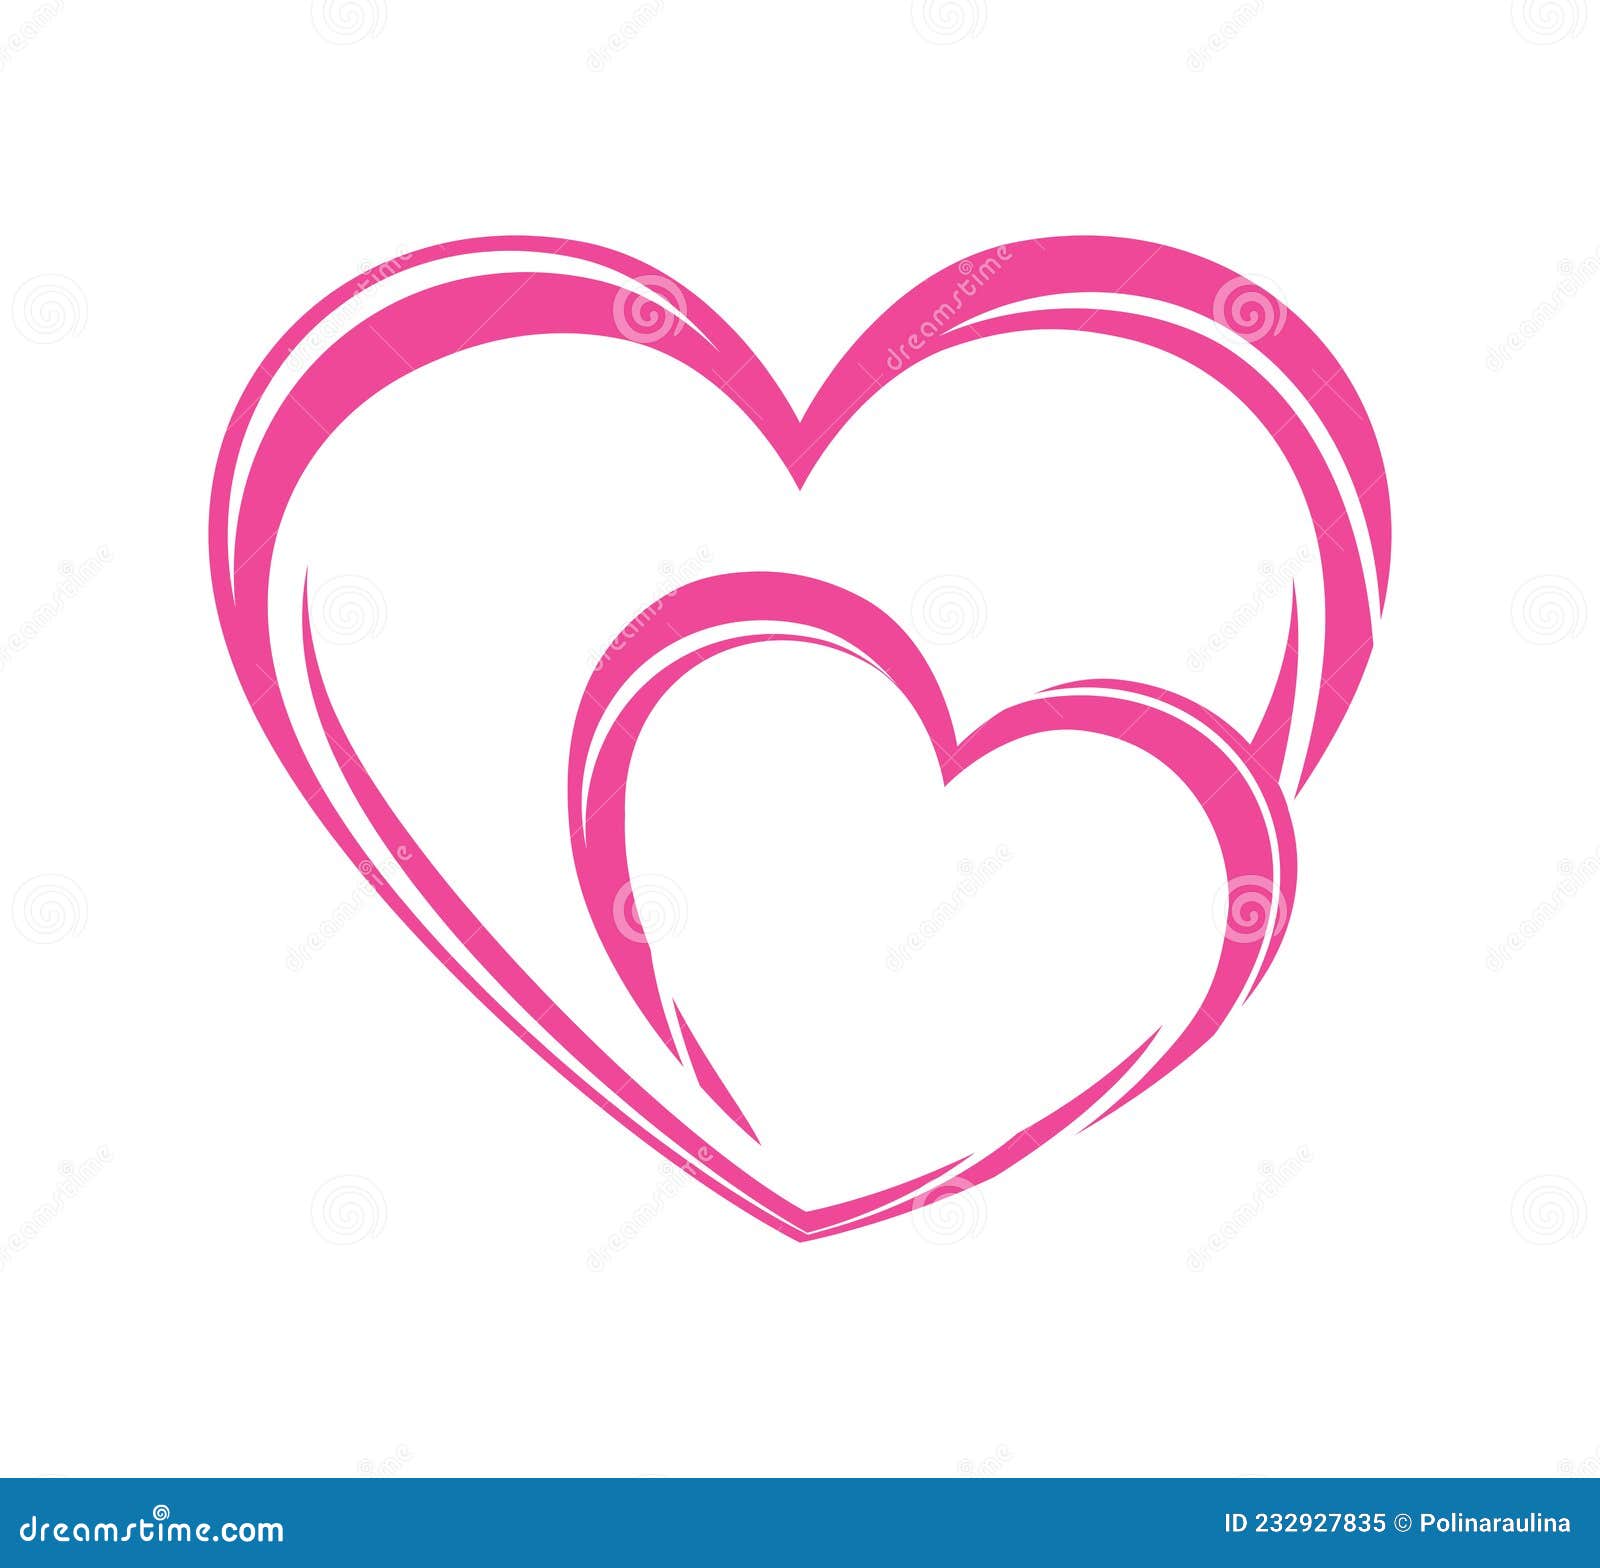 Hearts Outlined vinyl sticker decal love heart girls Valentine's anniversary 